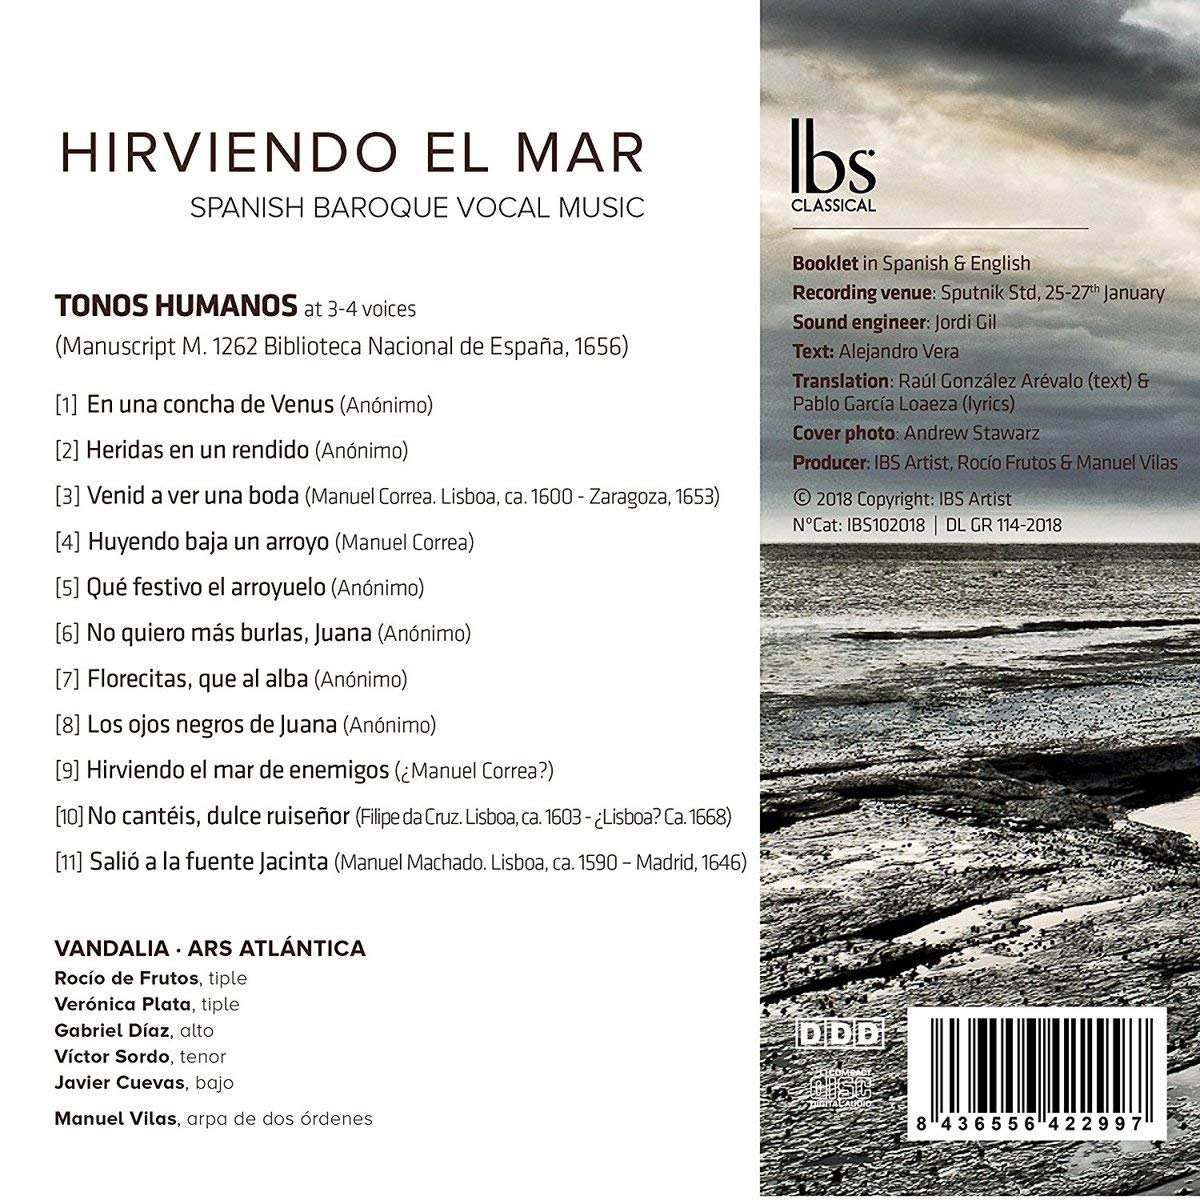 Vandalia / Ars Atlantica 스페인 바로크 보컬 음악 모음집 - 끓어오르는 바다 (Hirviendo El Mar - Spanish Baroque Vocal Music) 